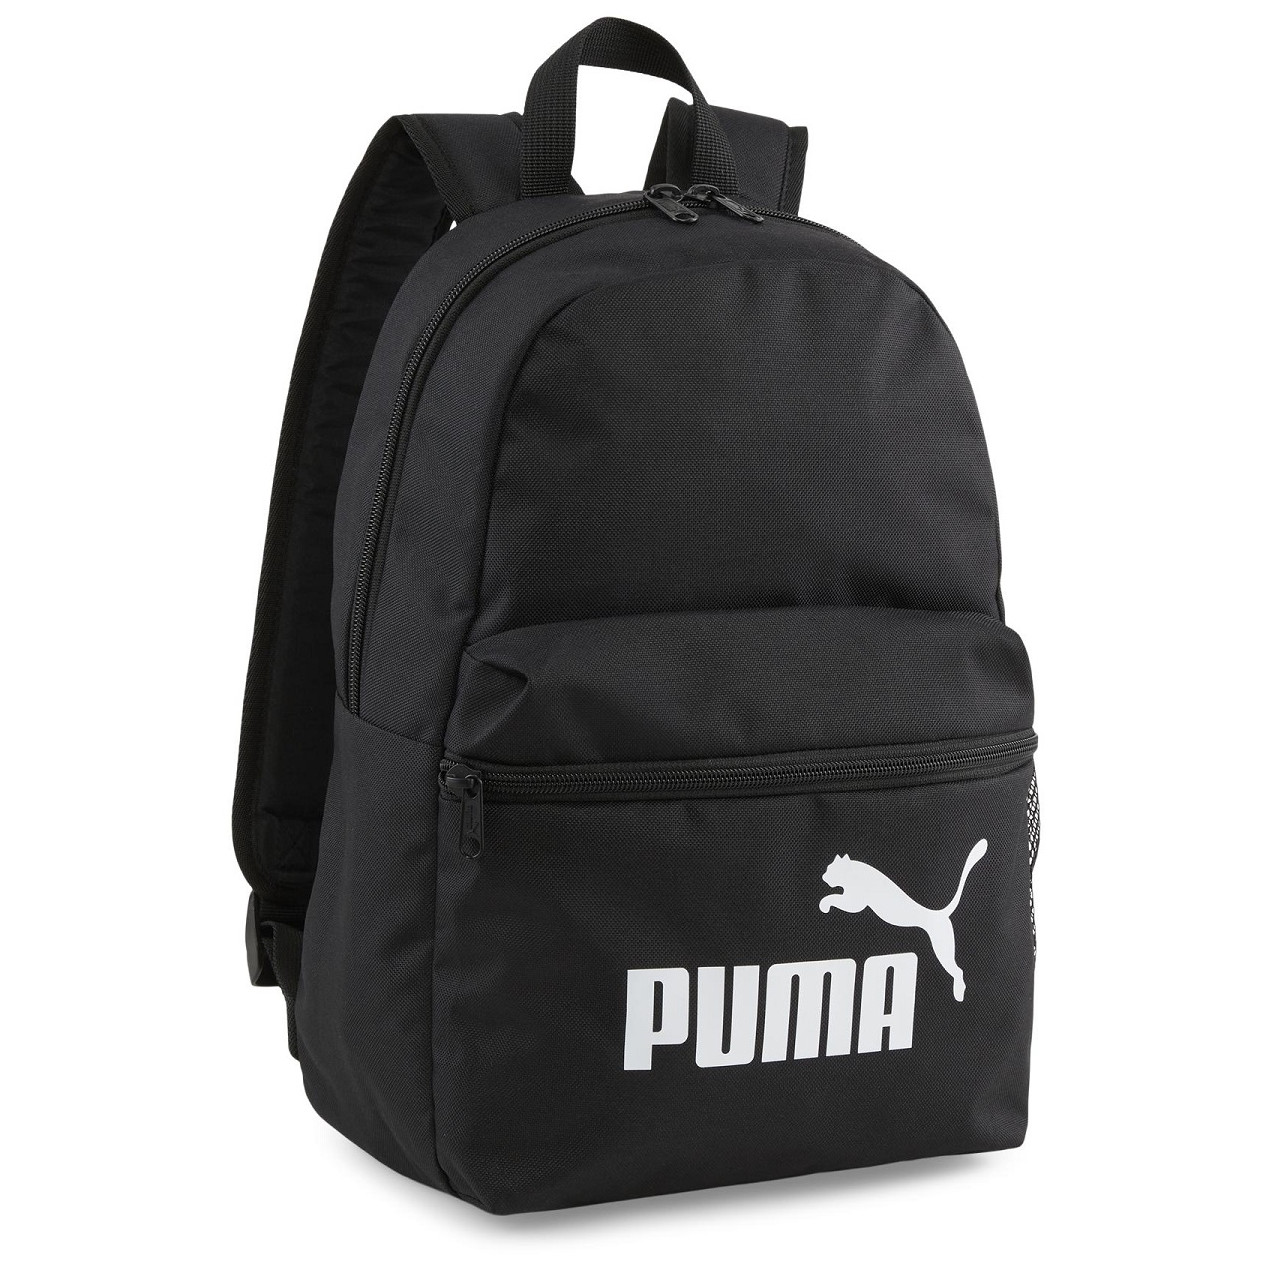 Batoh Puma Phase Small Backpack Barva: černá